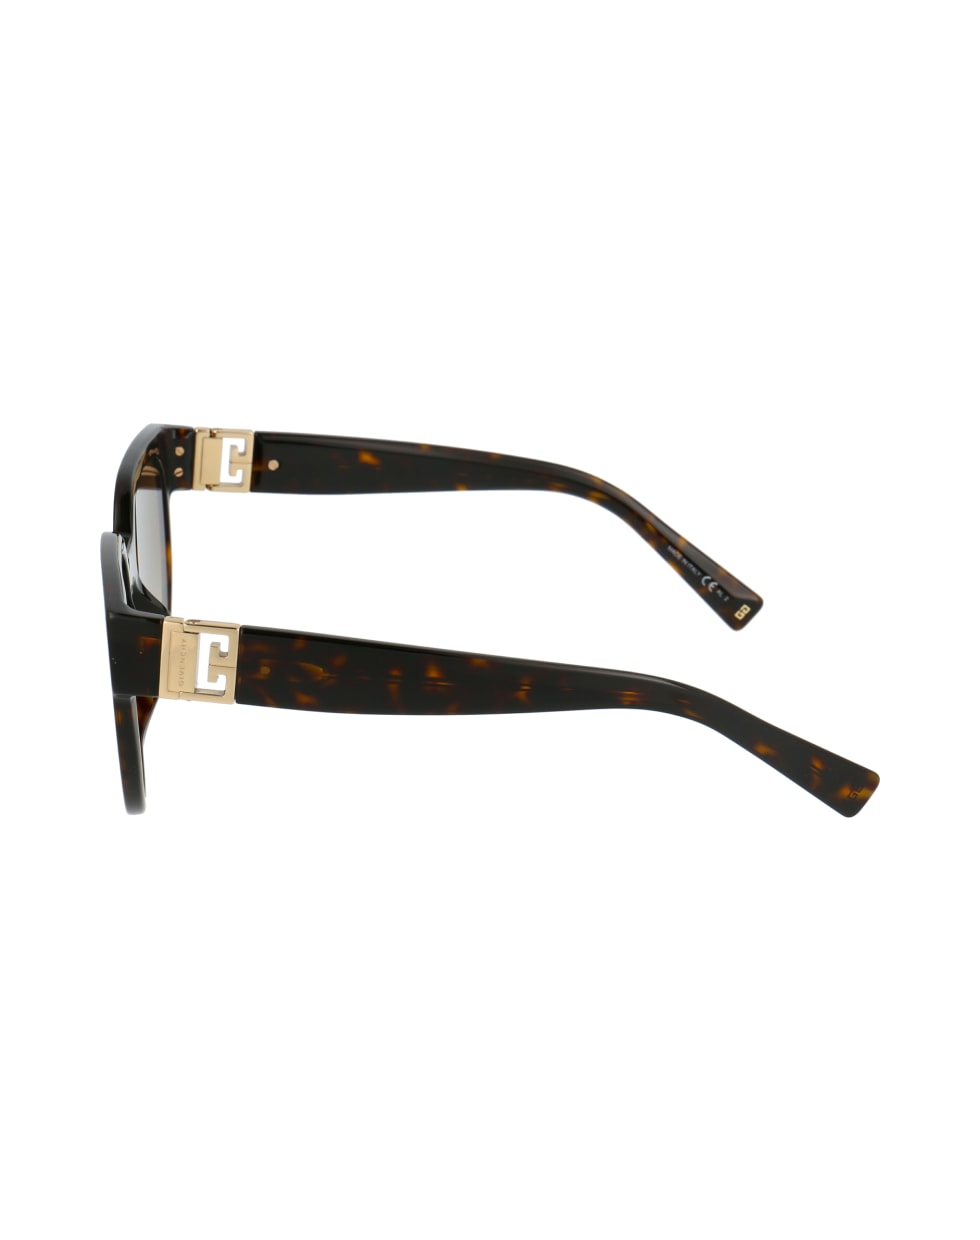 Givenchy Eyewear Gv 7155/g/s Sunglasses - 086HA HVN